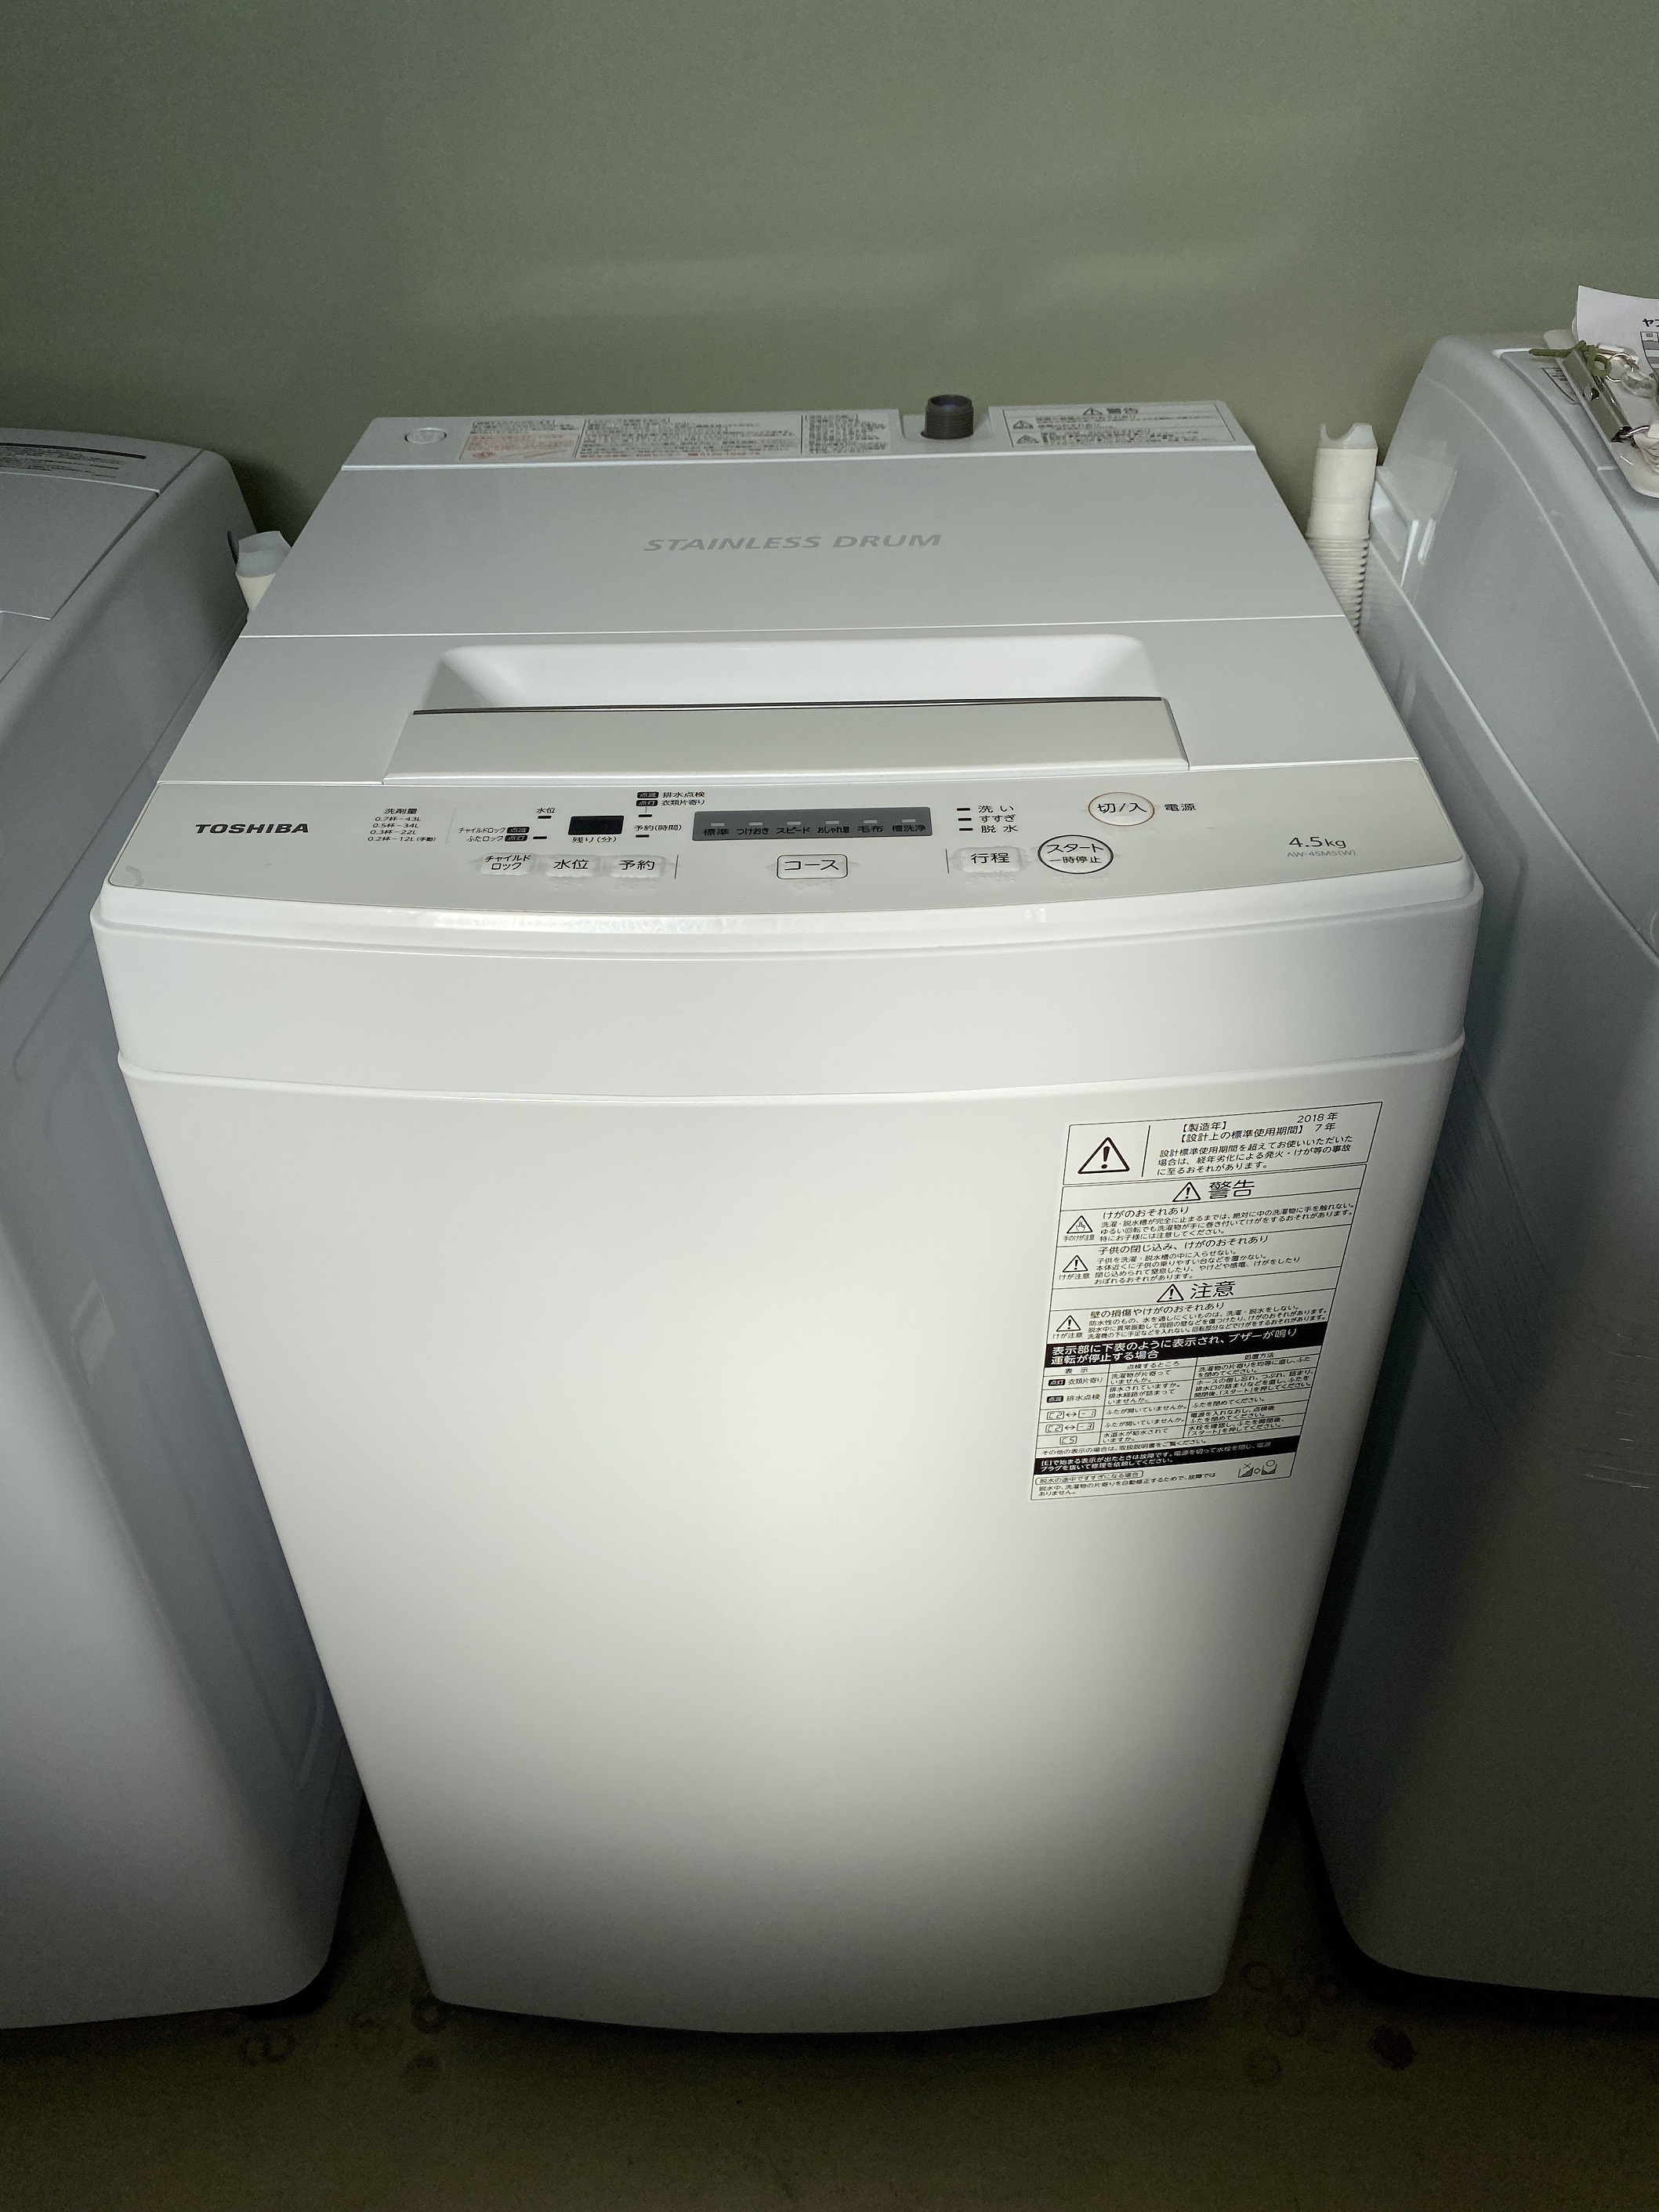 2/TOSHIBA 4.5kg電気洗濯機 AW-45M5 2018A容量 - 洗濯機